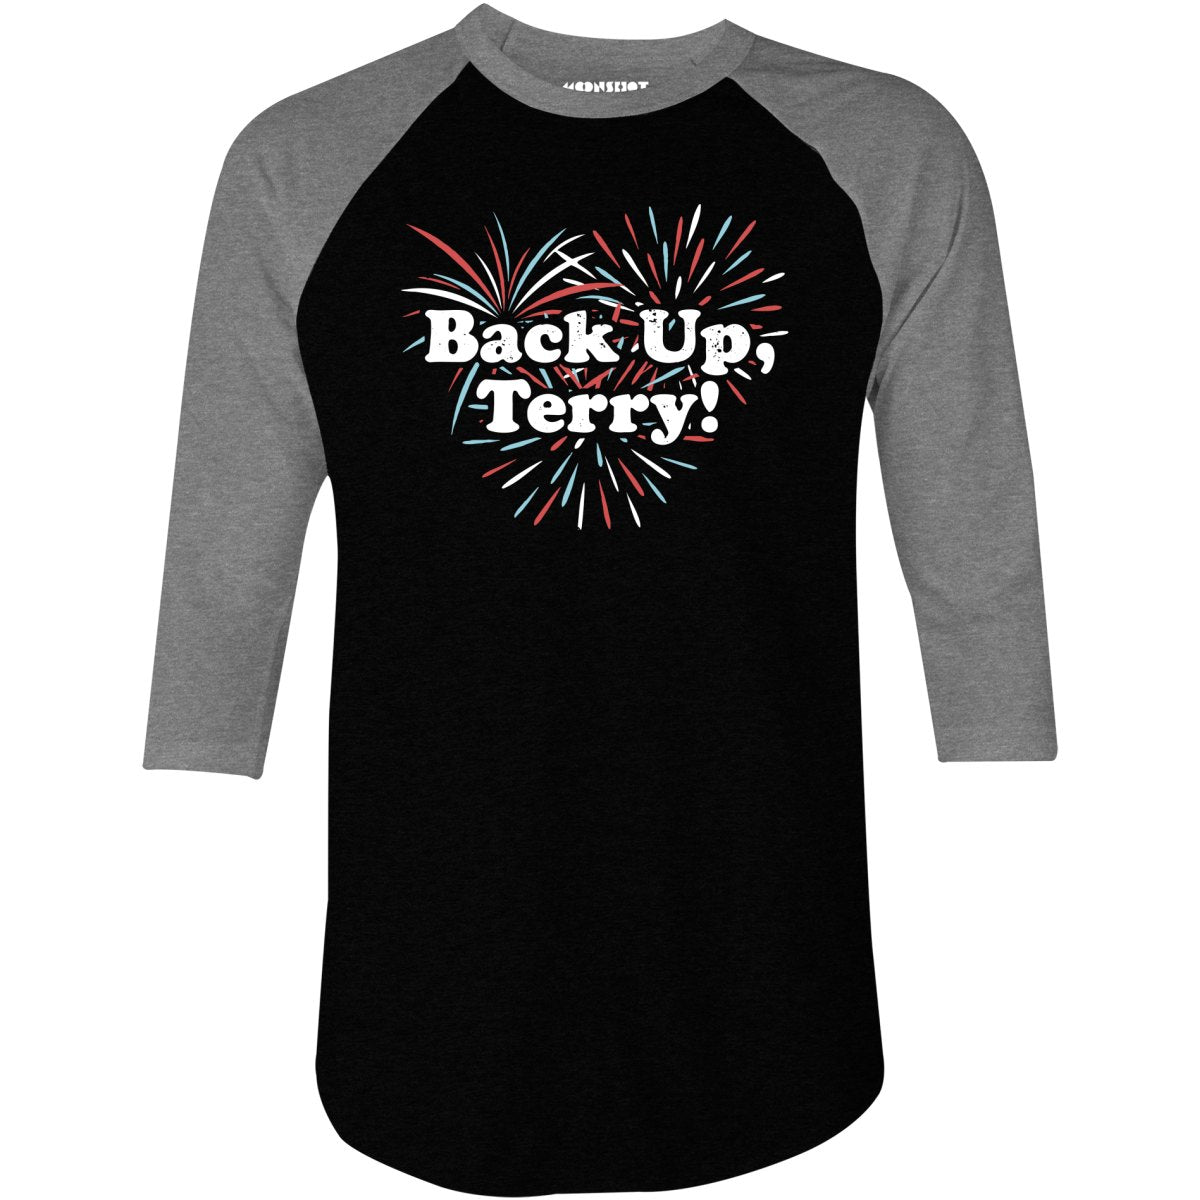 Back Up, Terry! - 3/4 Sleeve Raglan T-Shirt